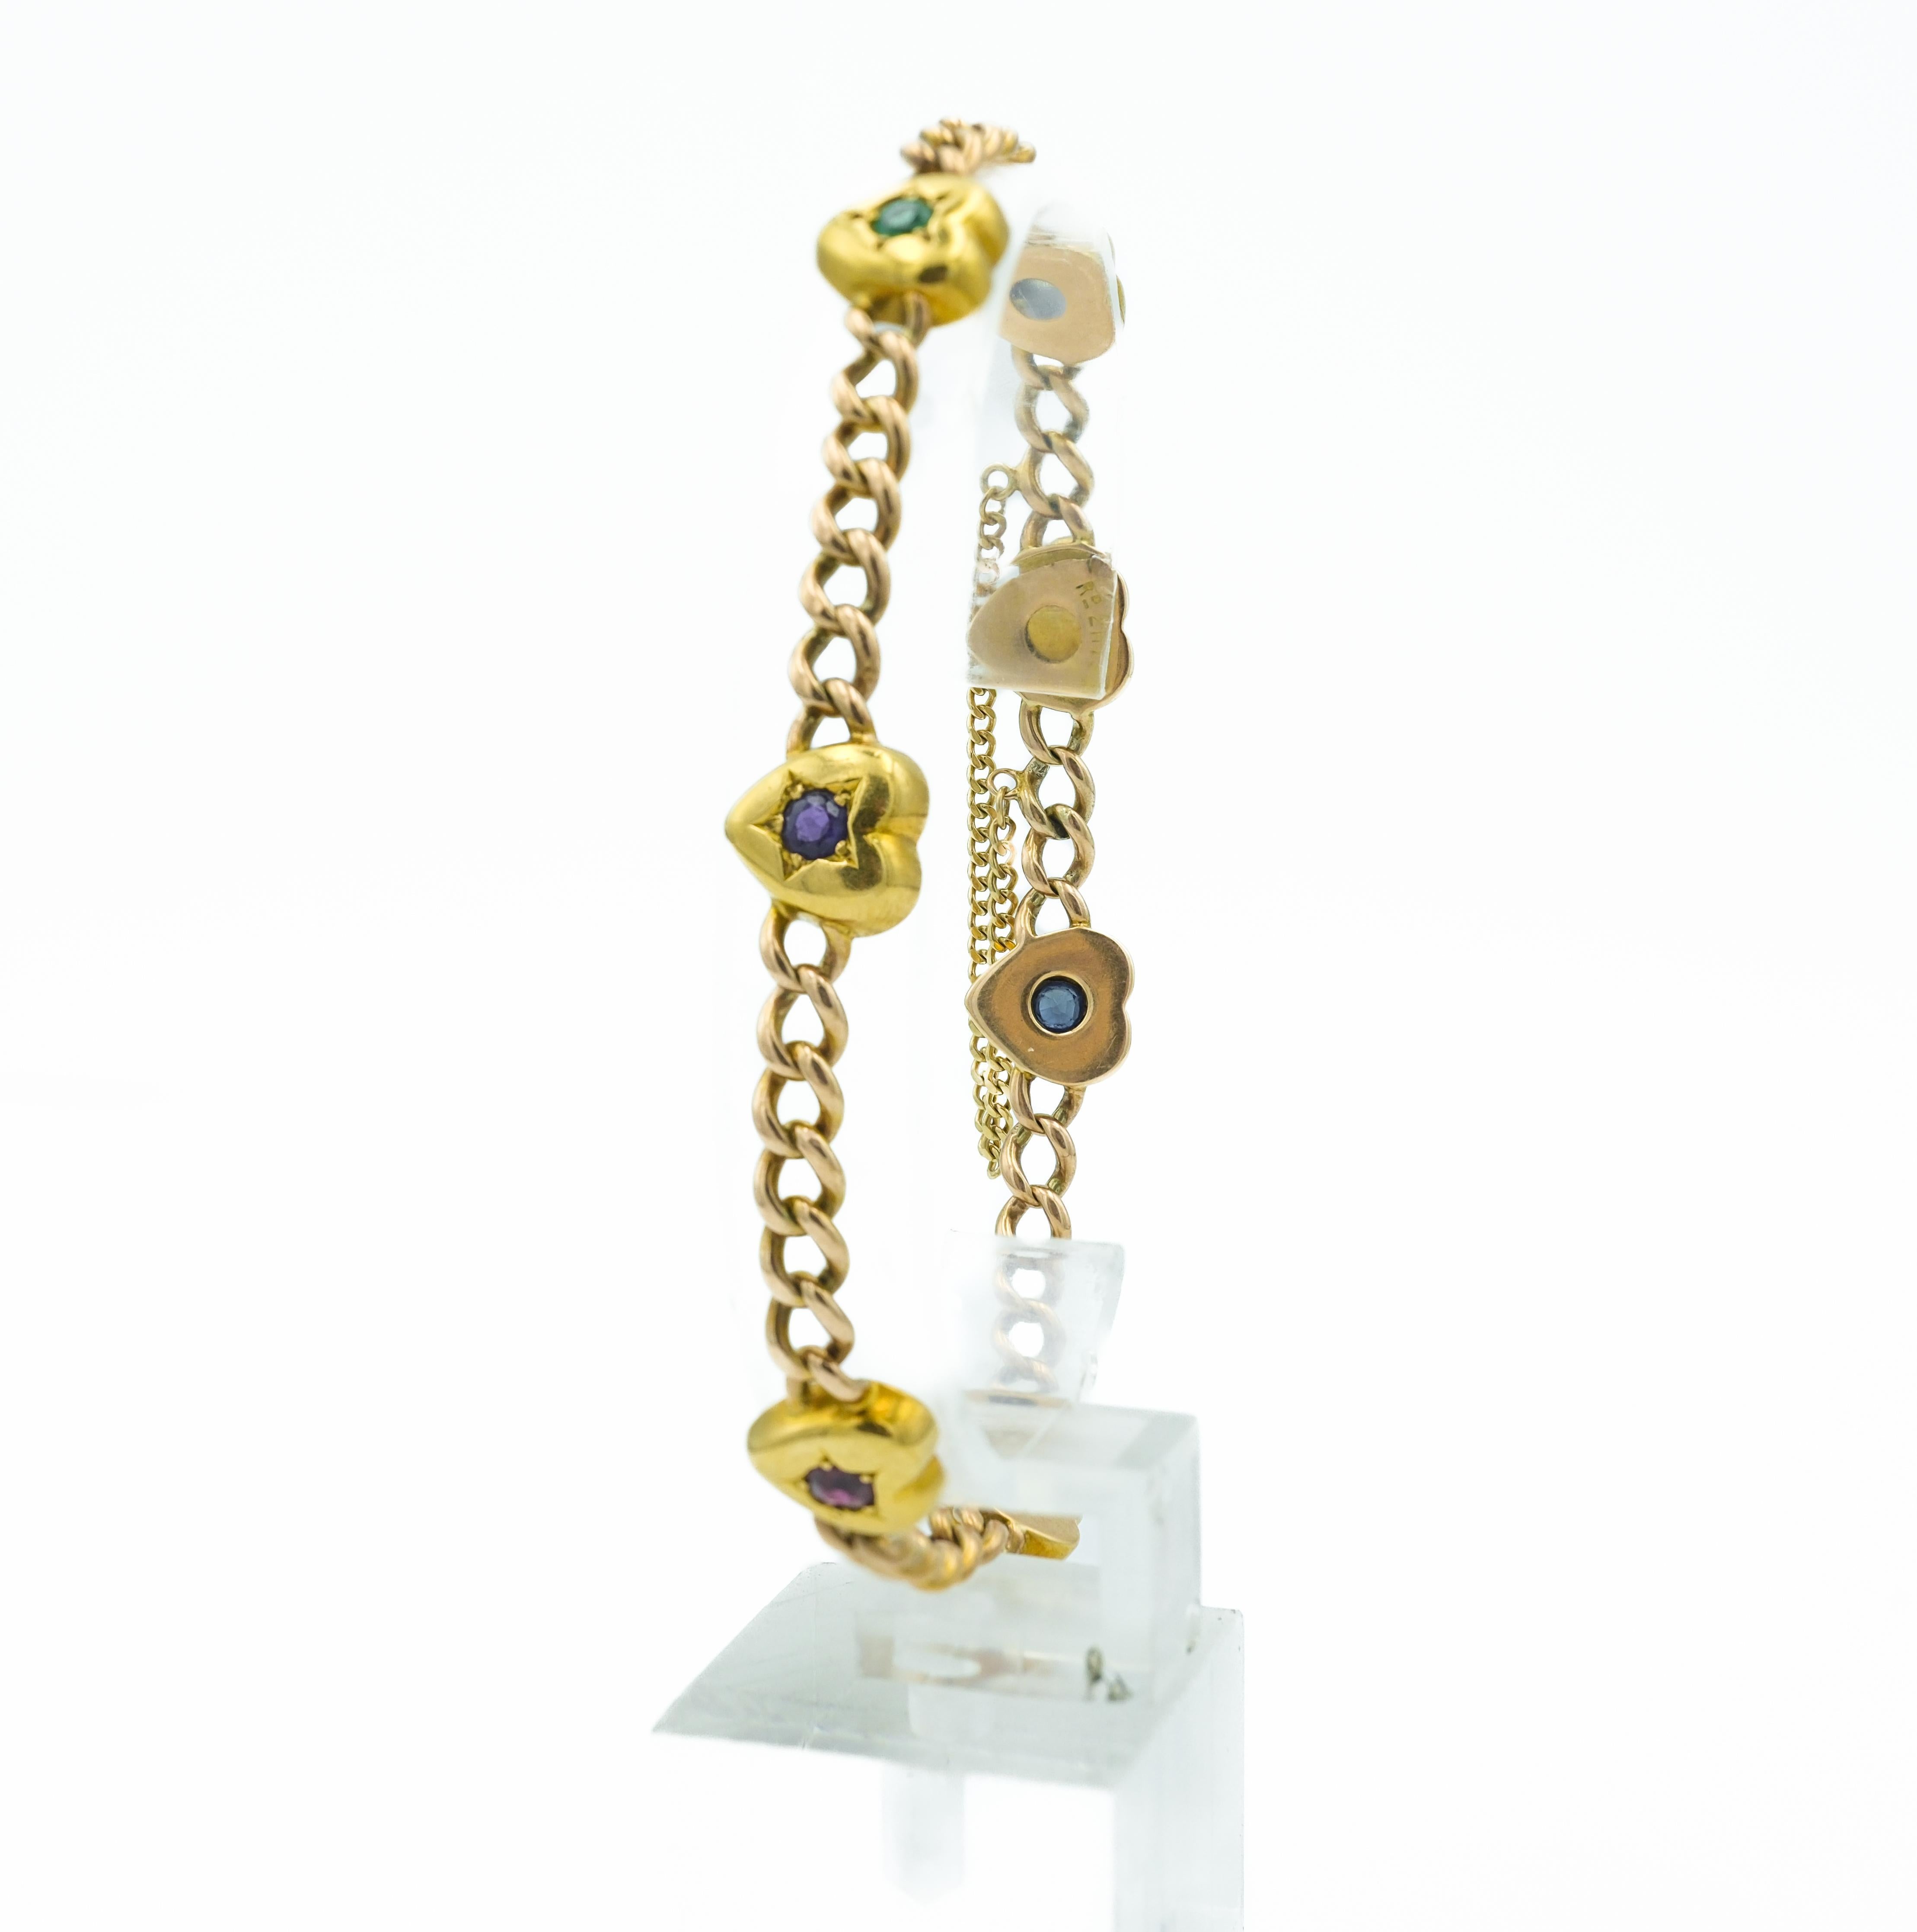 Antique Victorian Heart Shaped 'Dearest' Acrostic Bracelet 14 Karat Rose Gold In Good Condition For Sale In Fairfield, CT